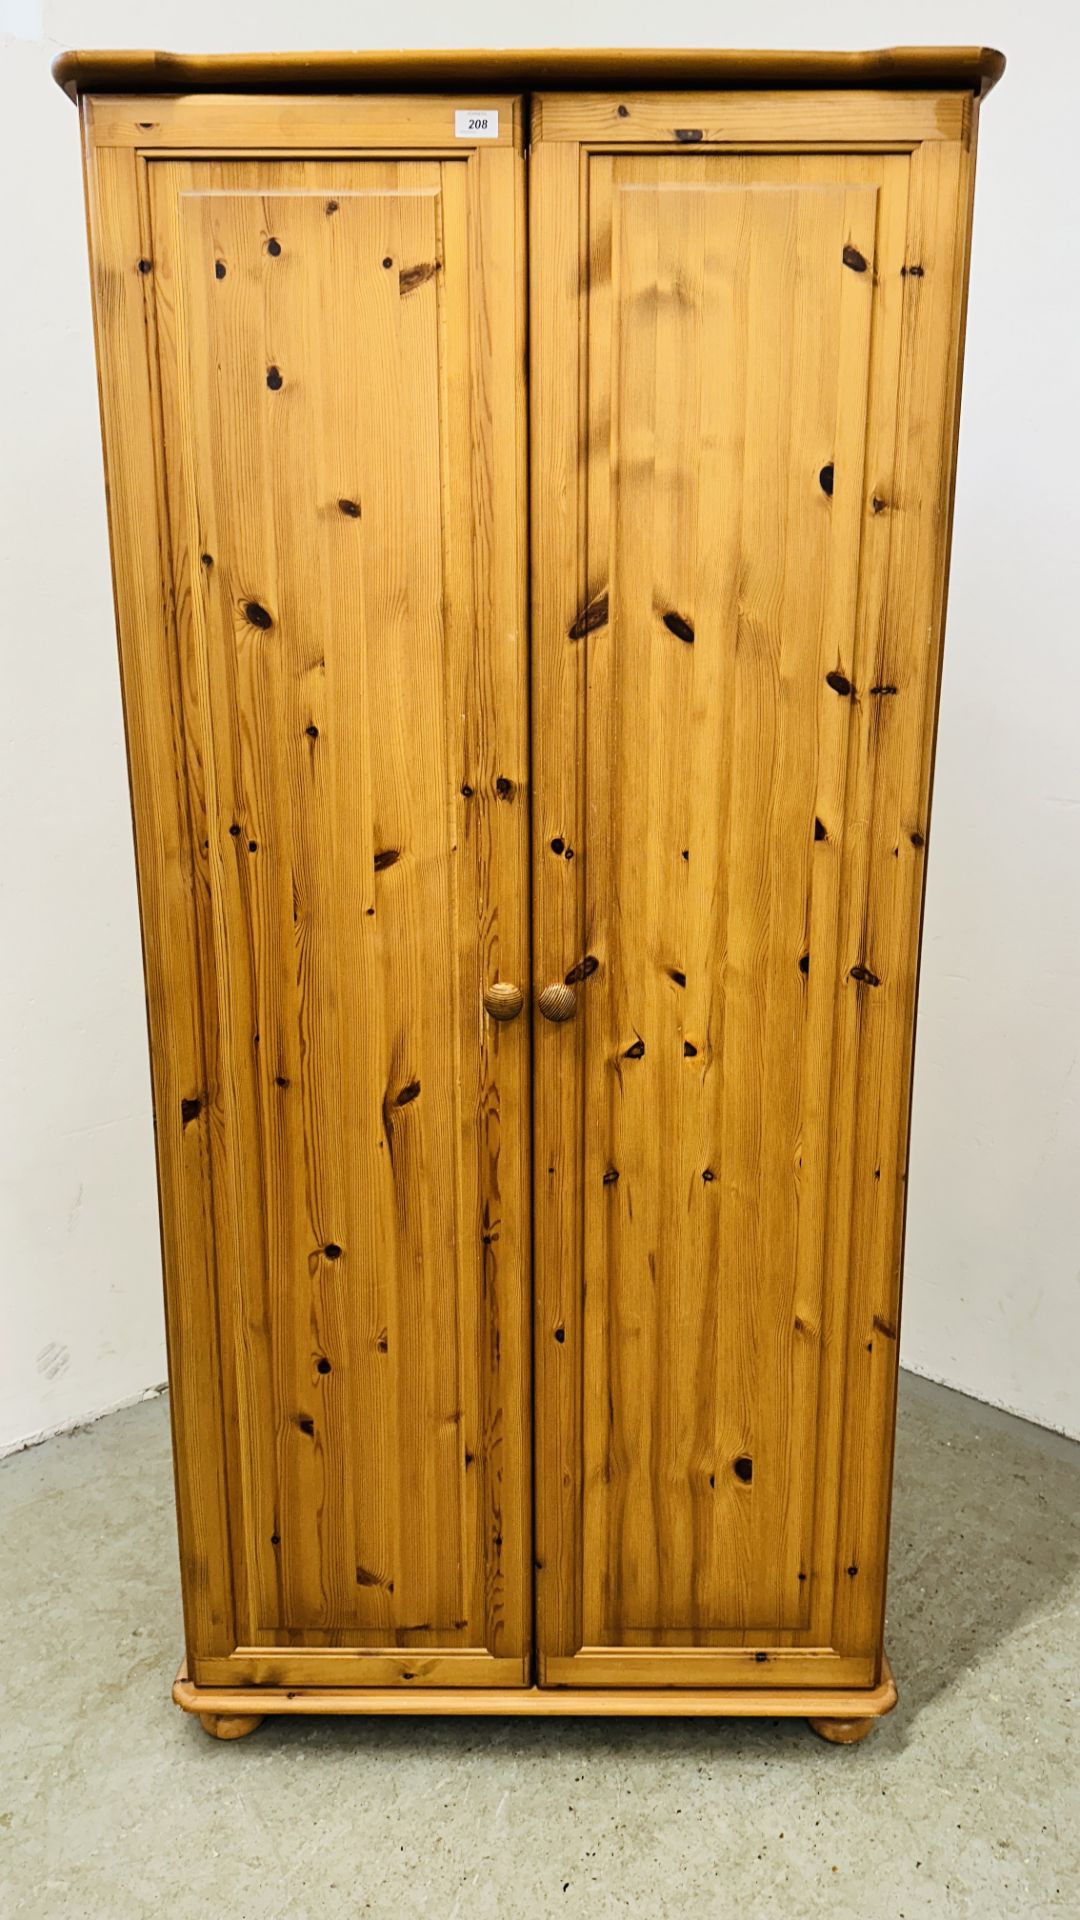 MODERN HONEY PINE TWO DOOR WARDROBE - W 85CM X D 53CM X H 179CM. - Image 5 of 5